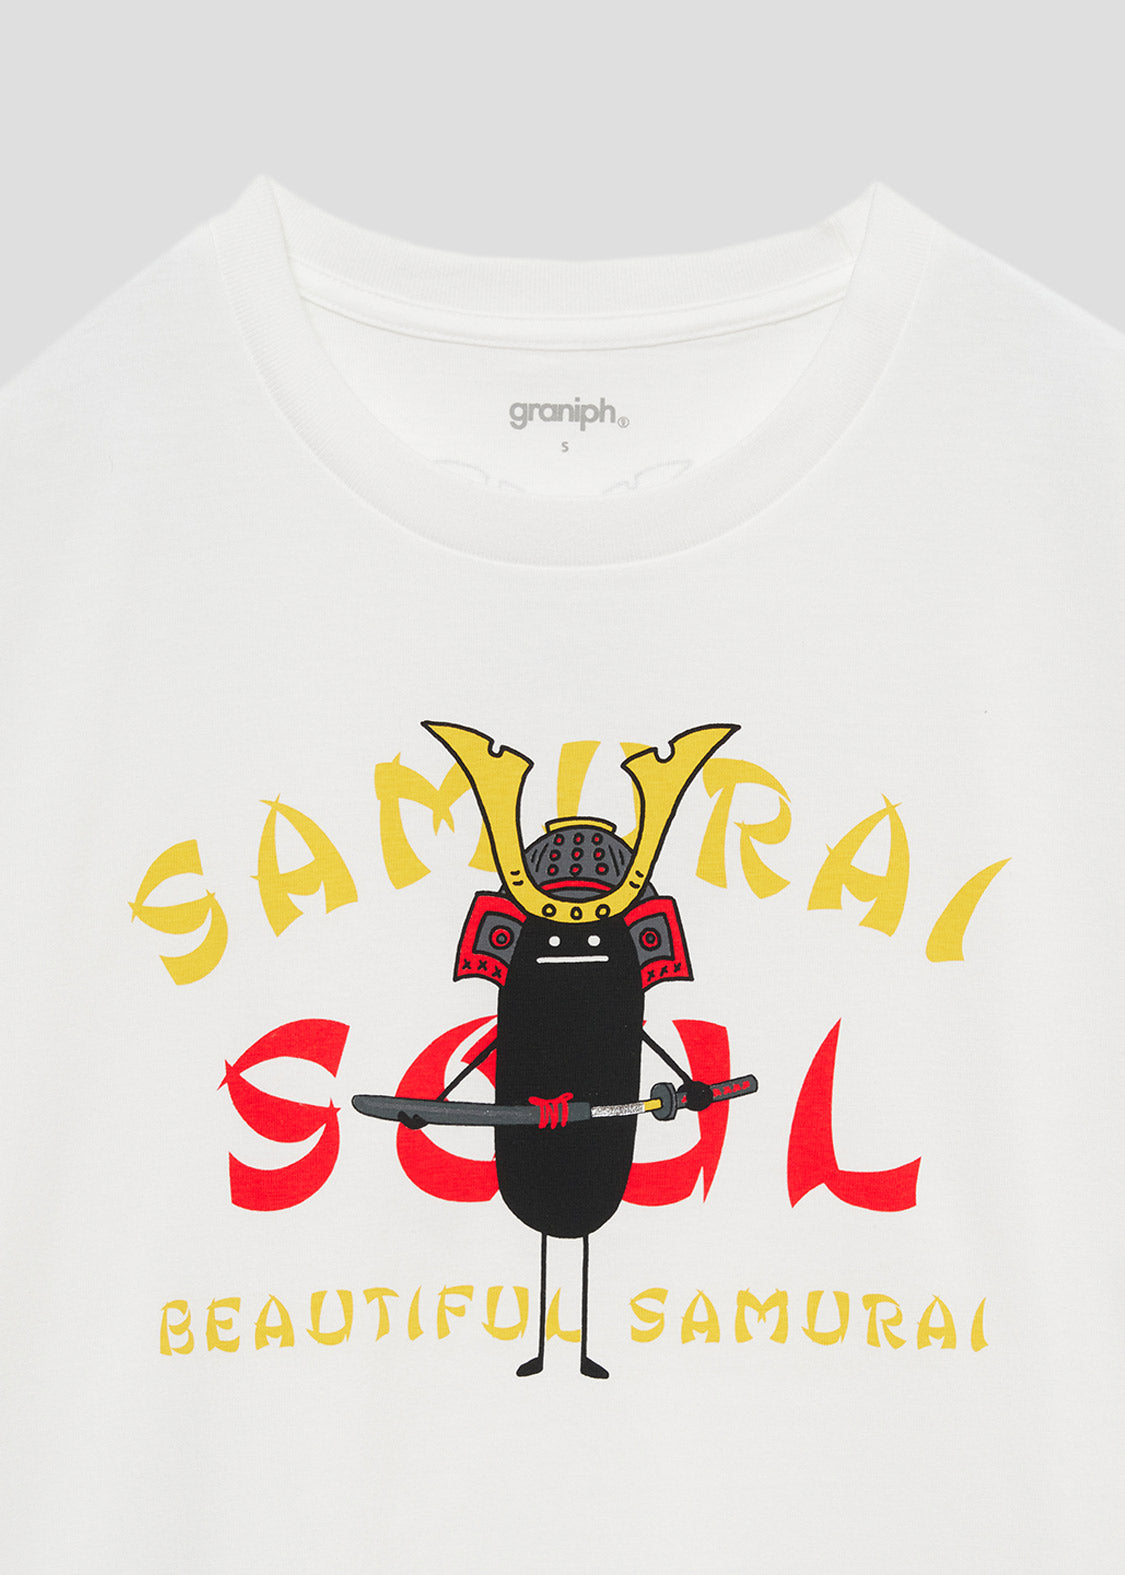 Samurai Beautiful Shadow